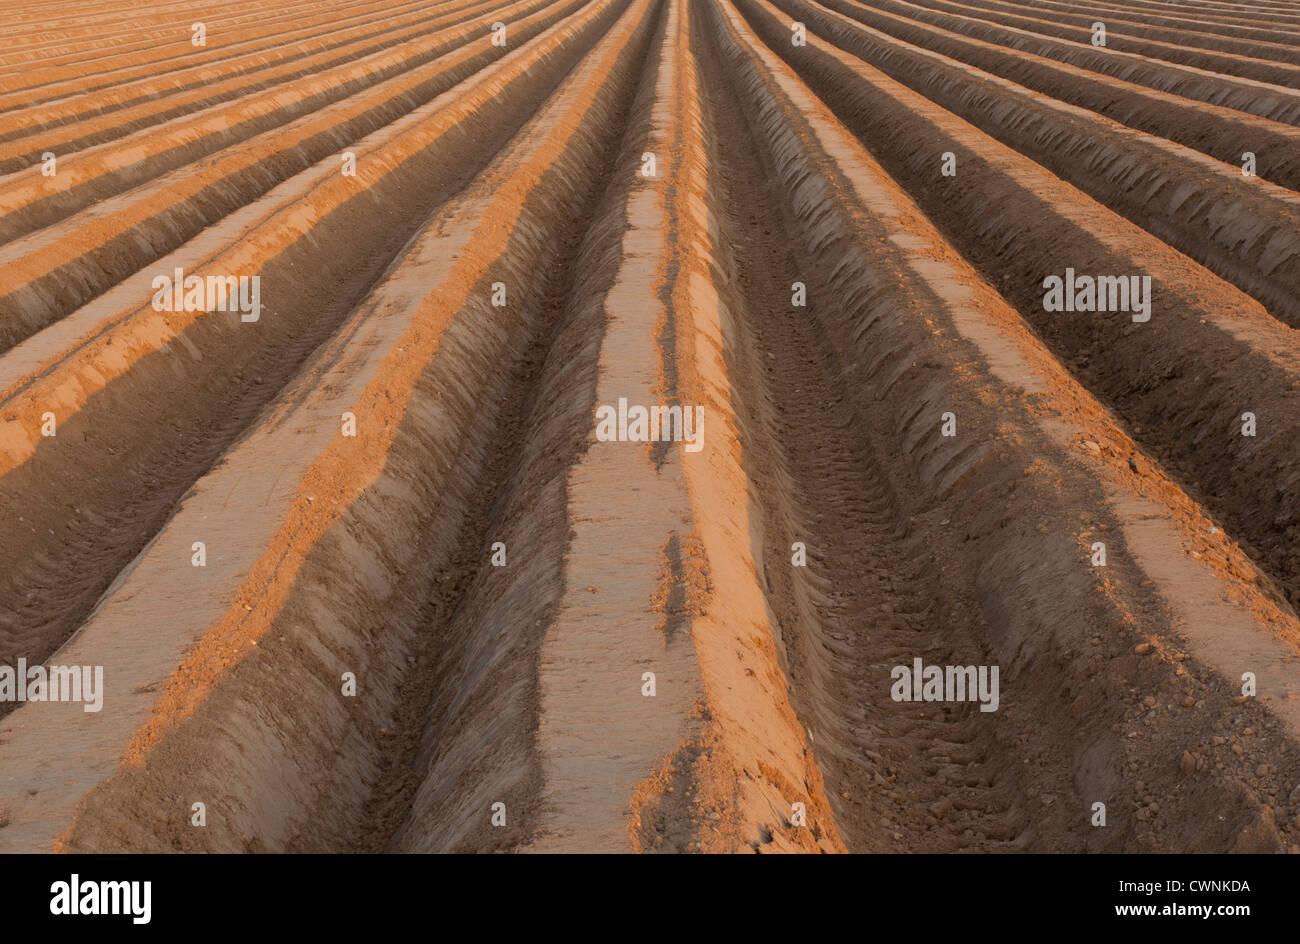 Rows of potato baulks in a field Stock Photo